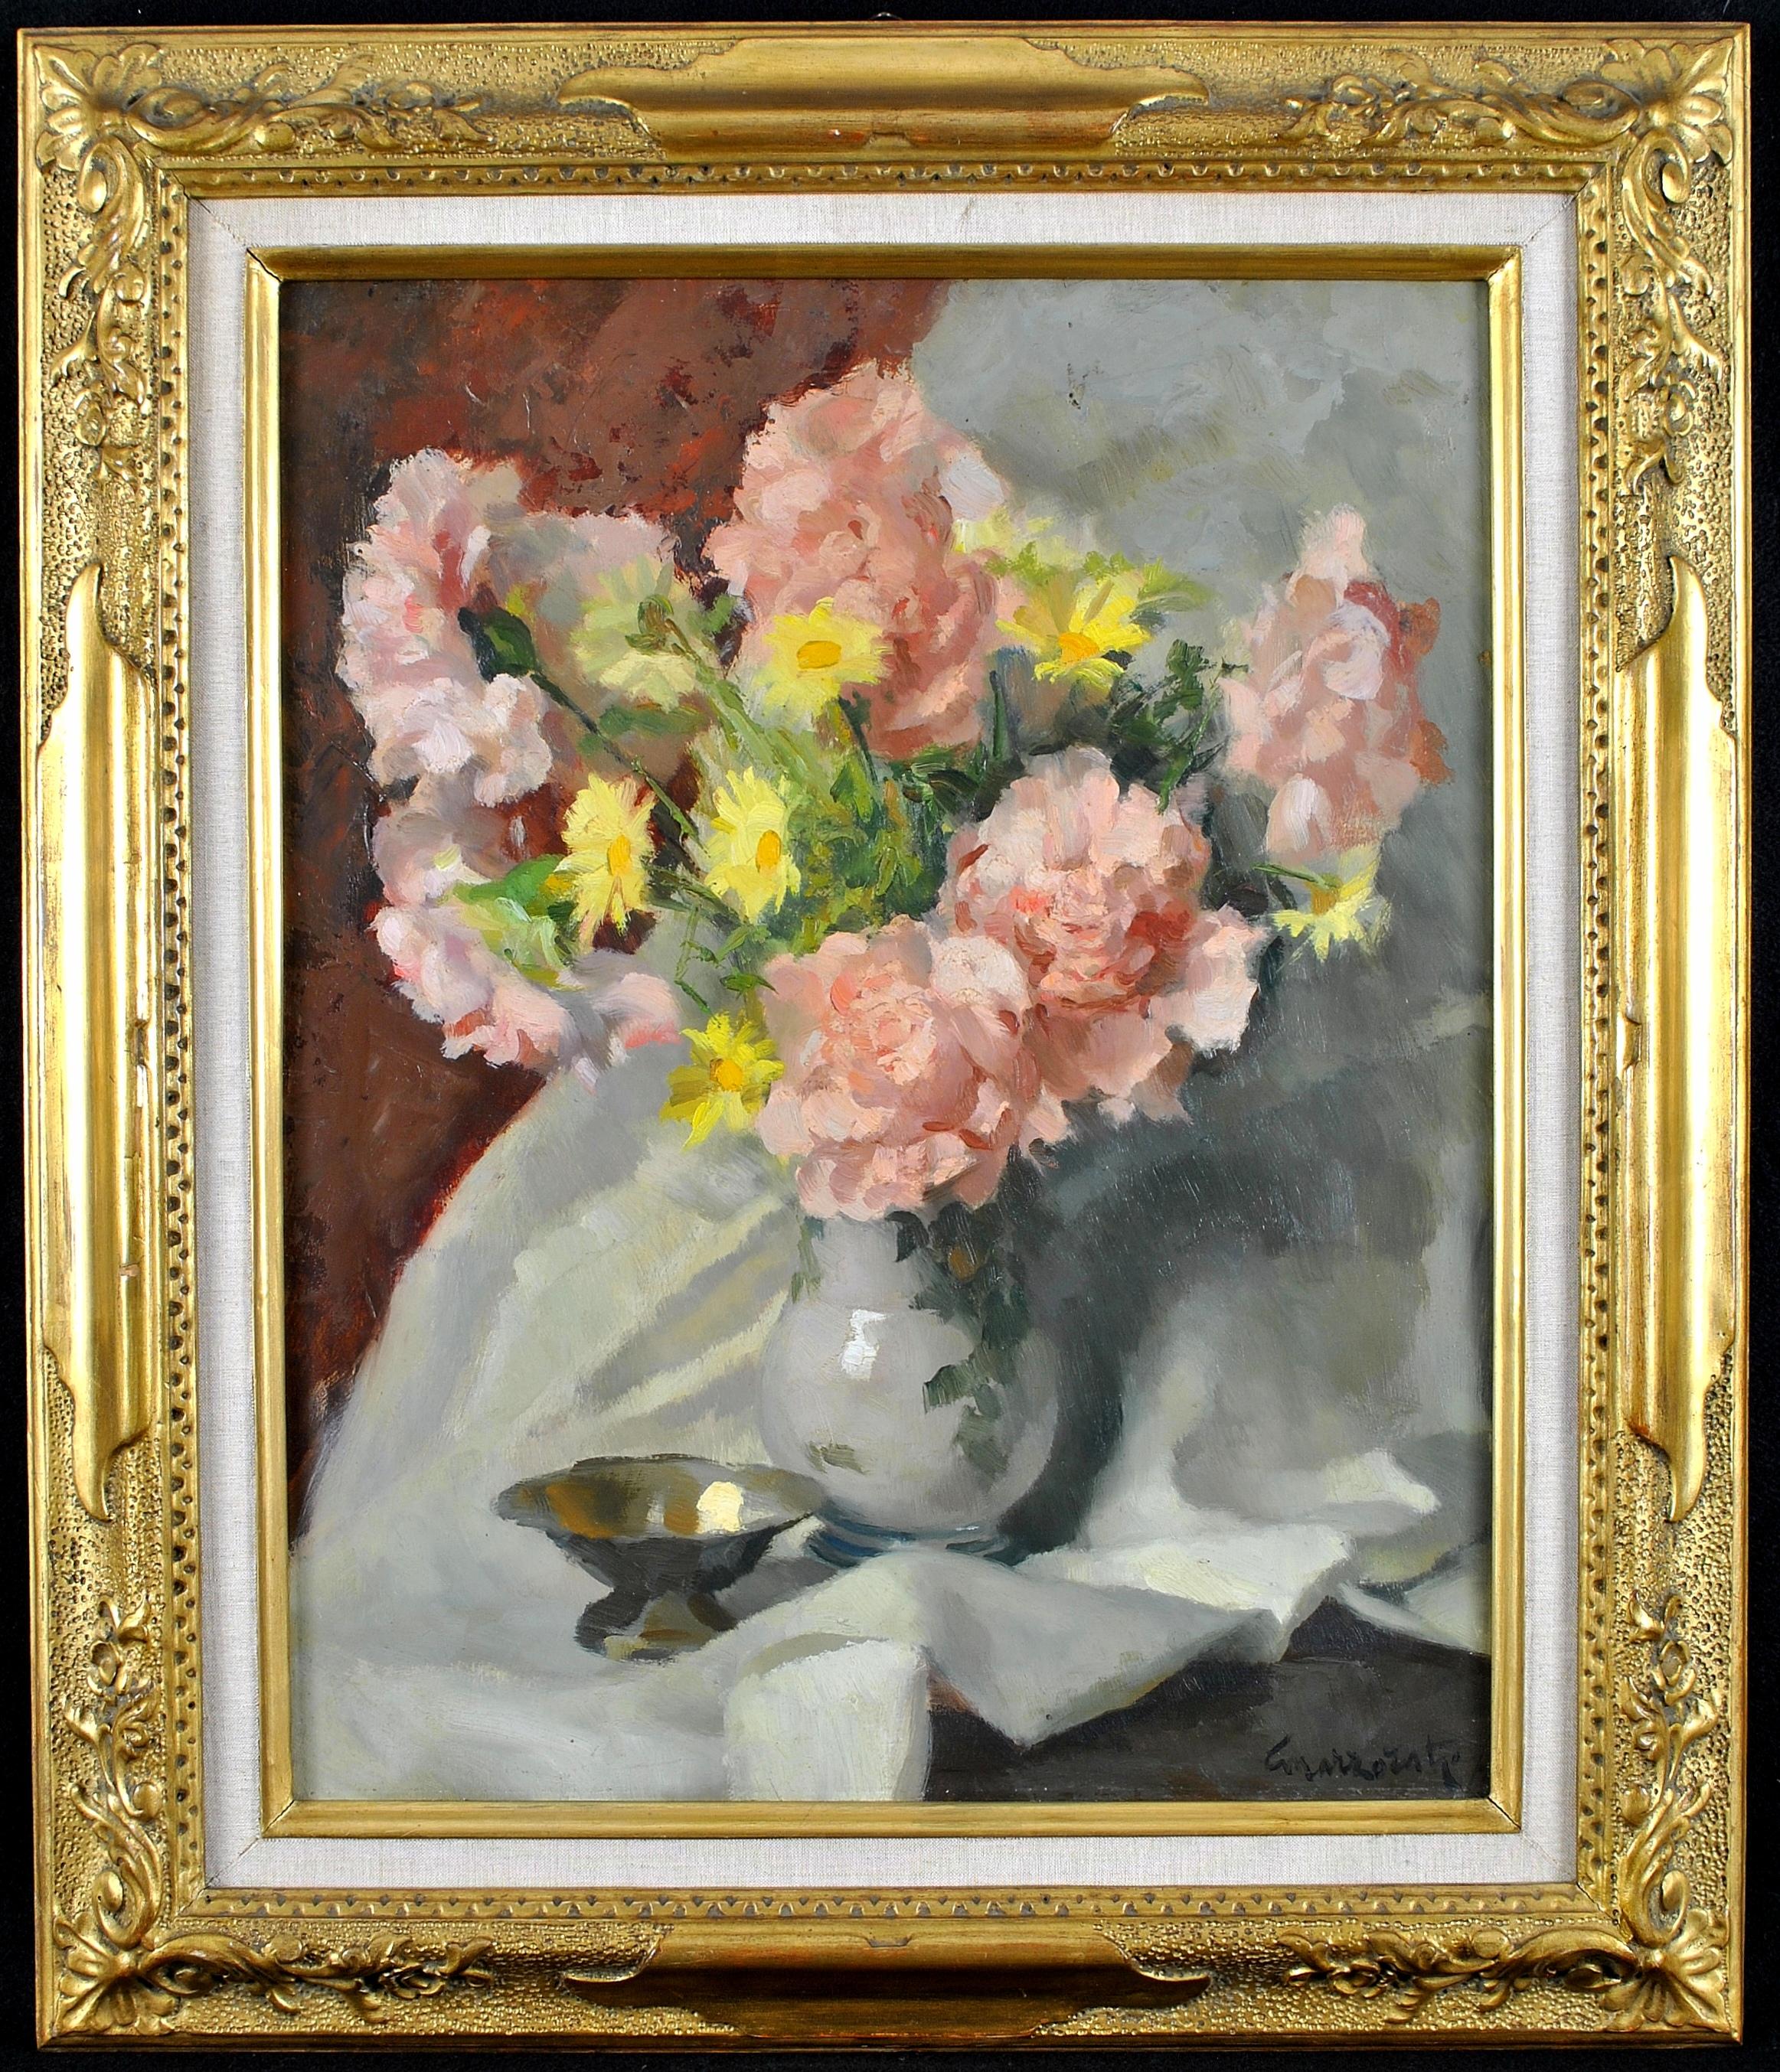 Still-Life Painting Carlo Marzorati - Roses et fleurs sauvages - Nature morte impressionniste italienne du 20e siècle